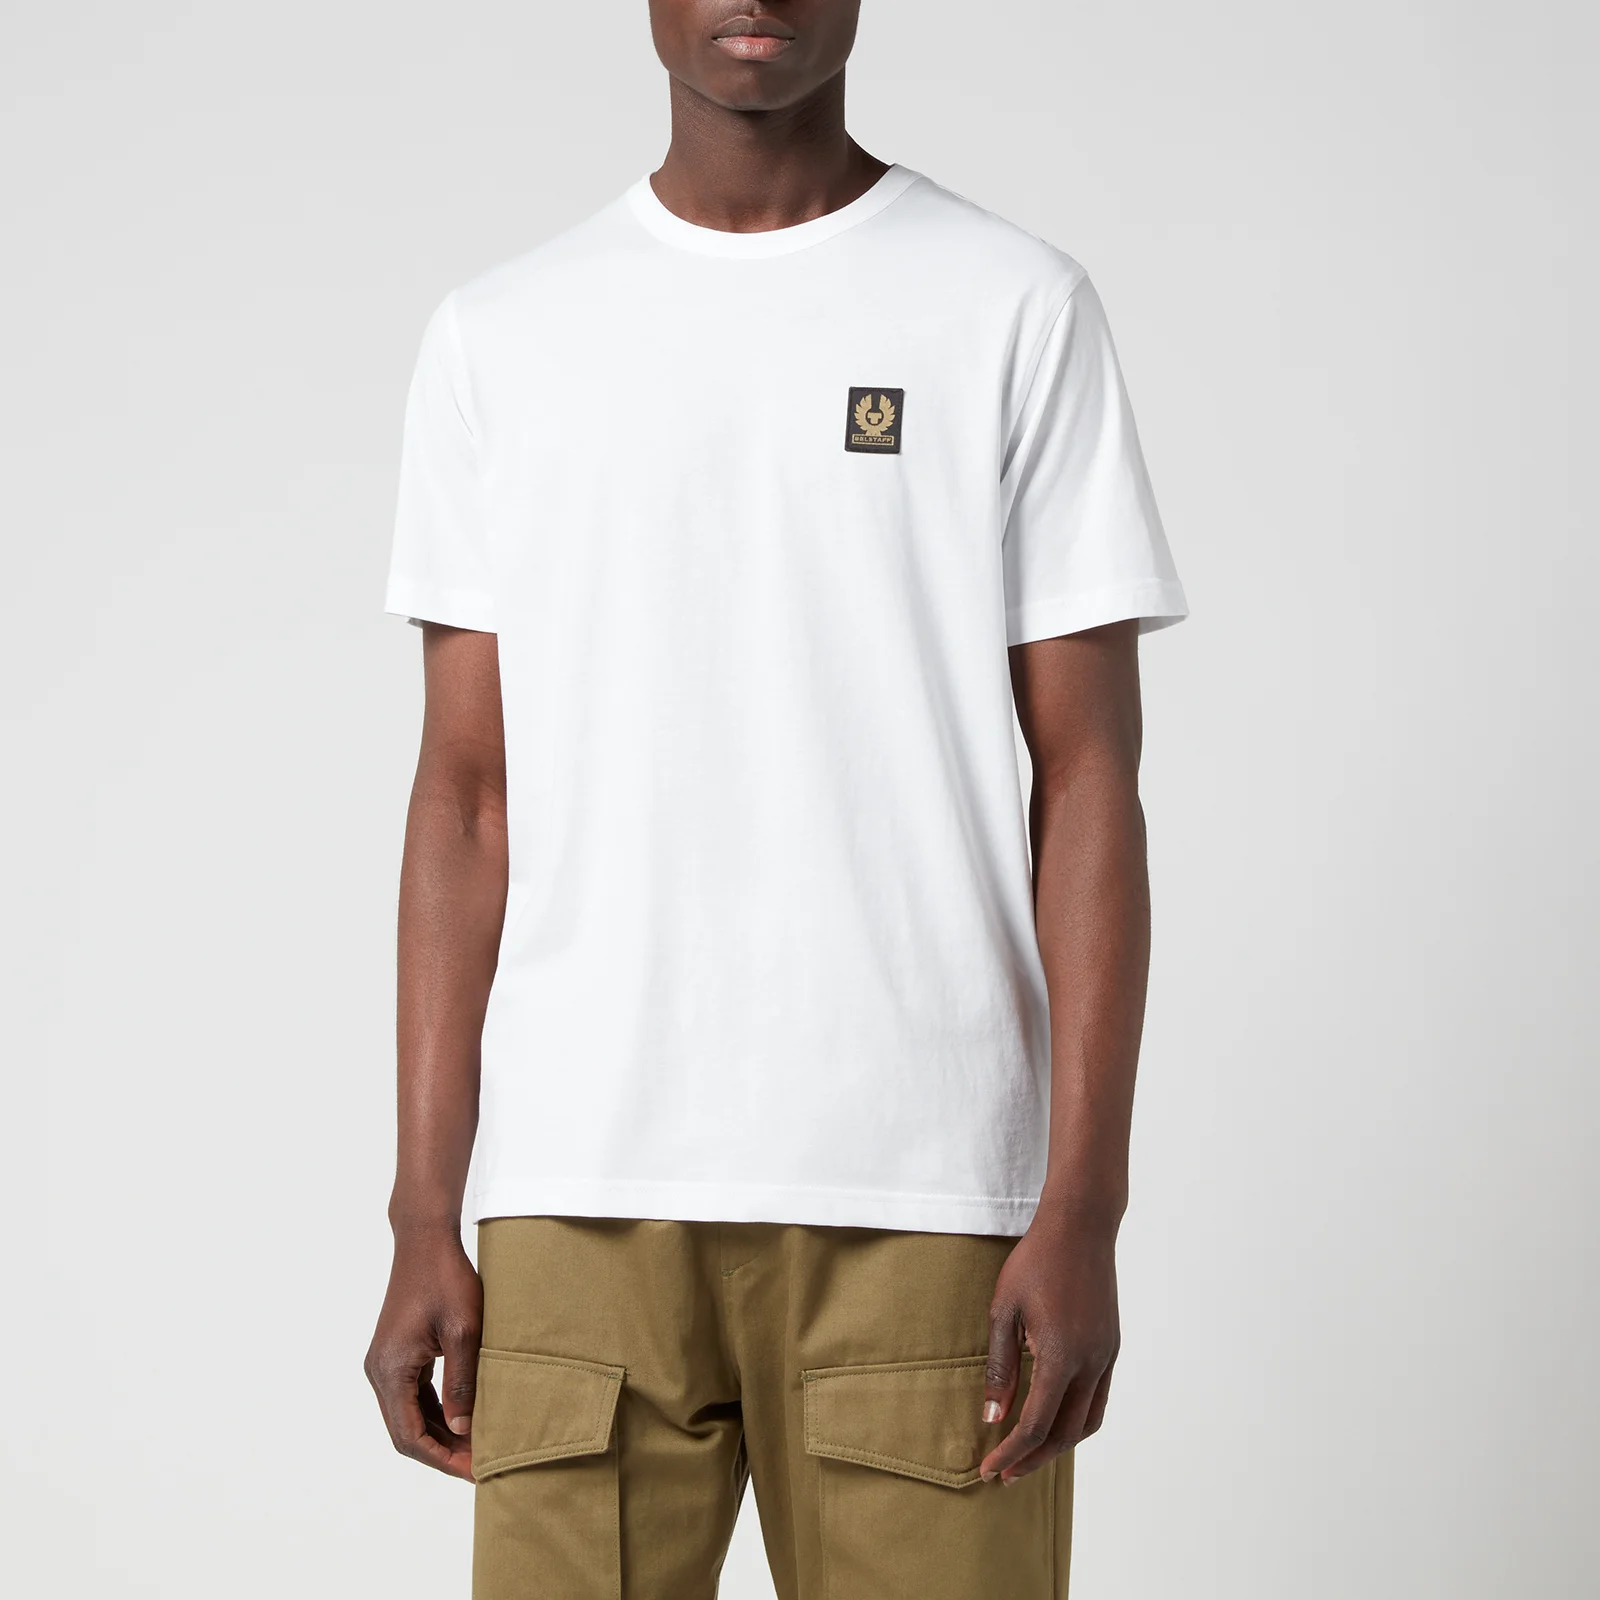 Belstaff Men's Patch T-Shirt - White Image 1